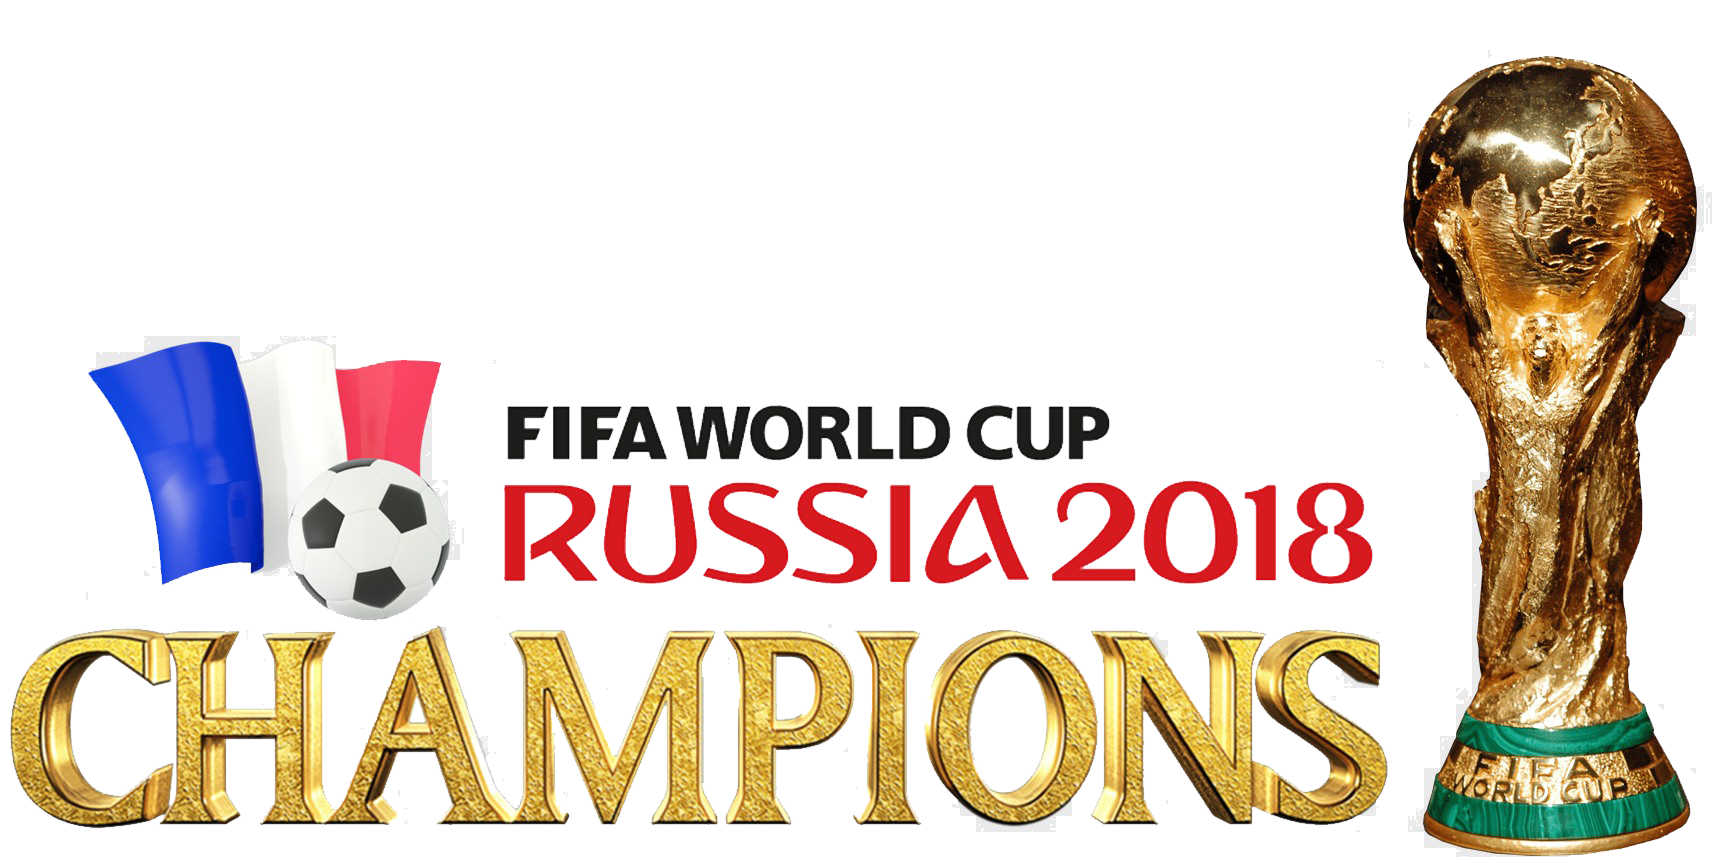 Download France Won Fifa World Cup 2018 HQ PNG Image | FreePNGImg